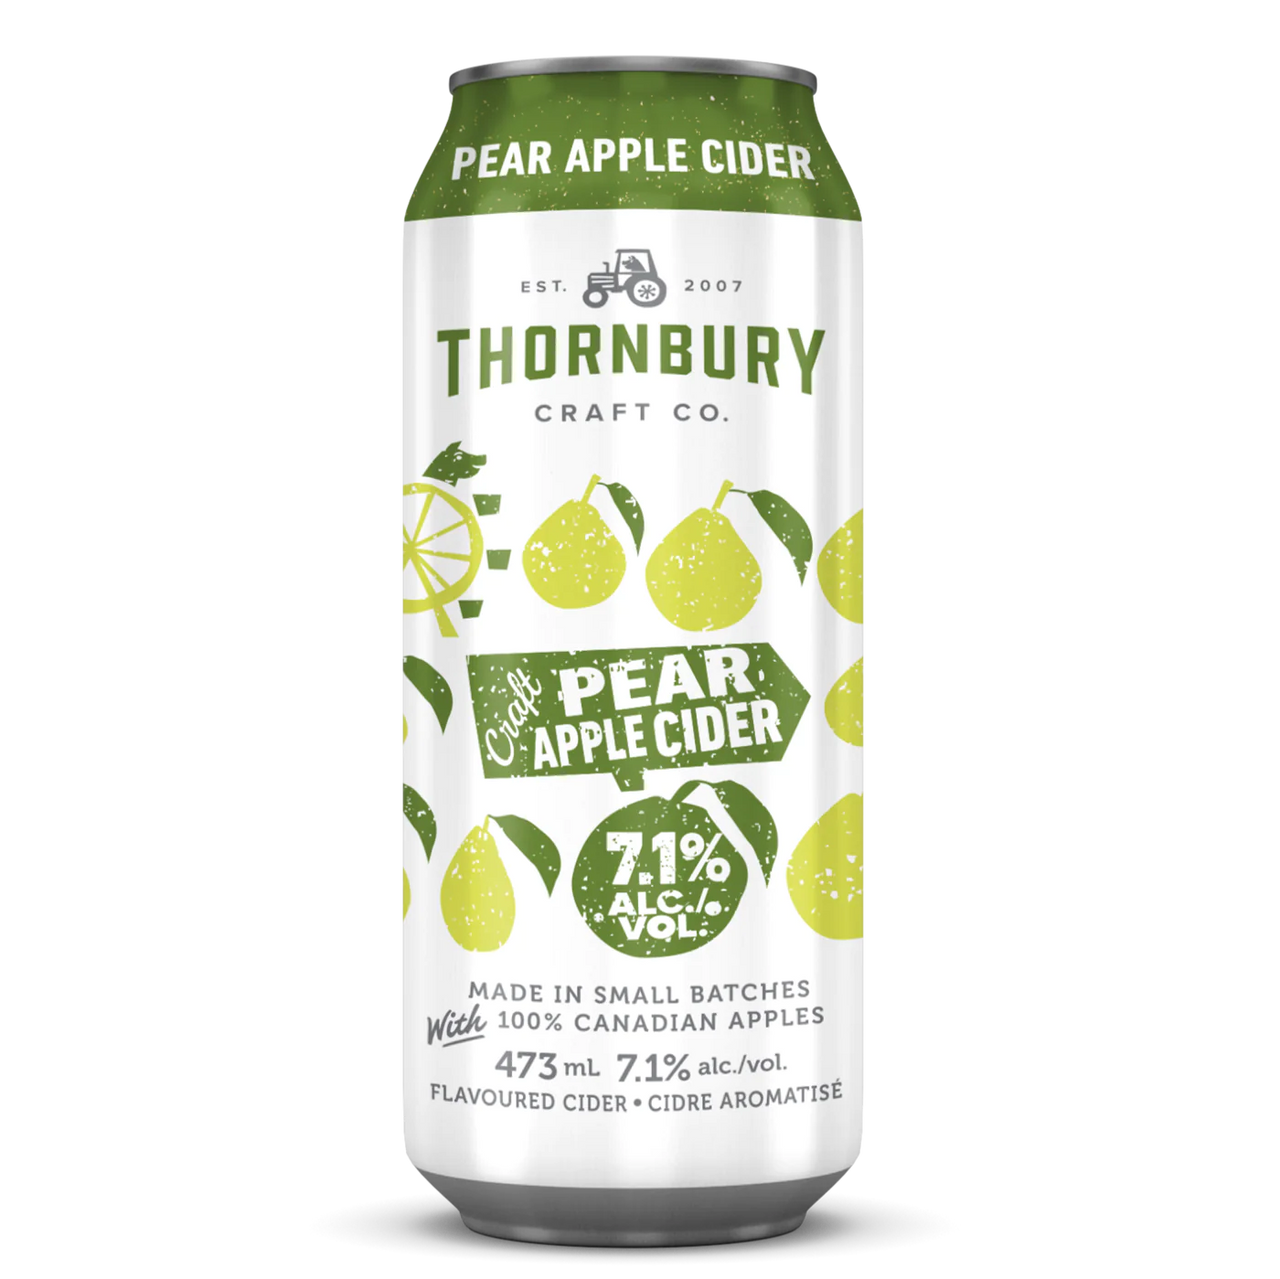 Thornbury Pear Apple Cider